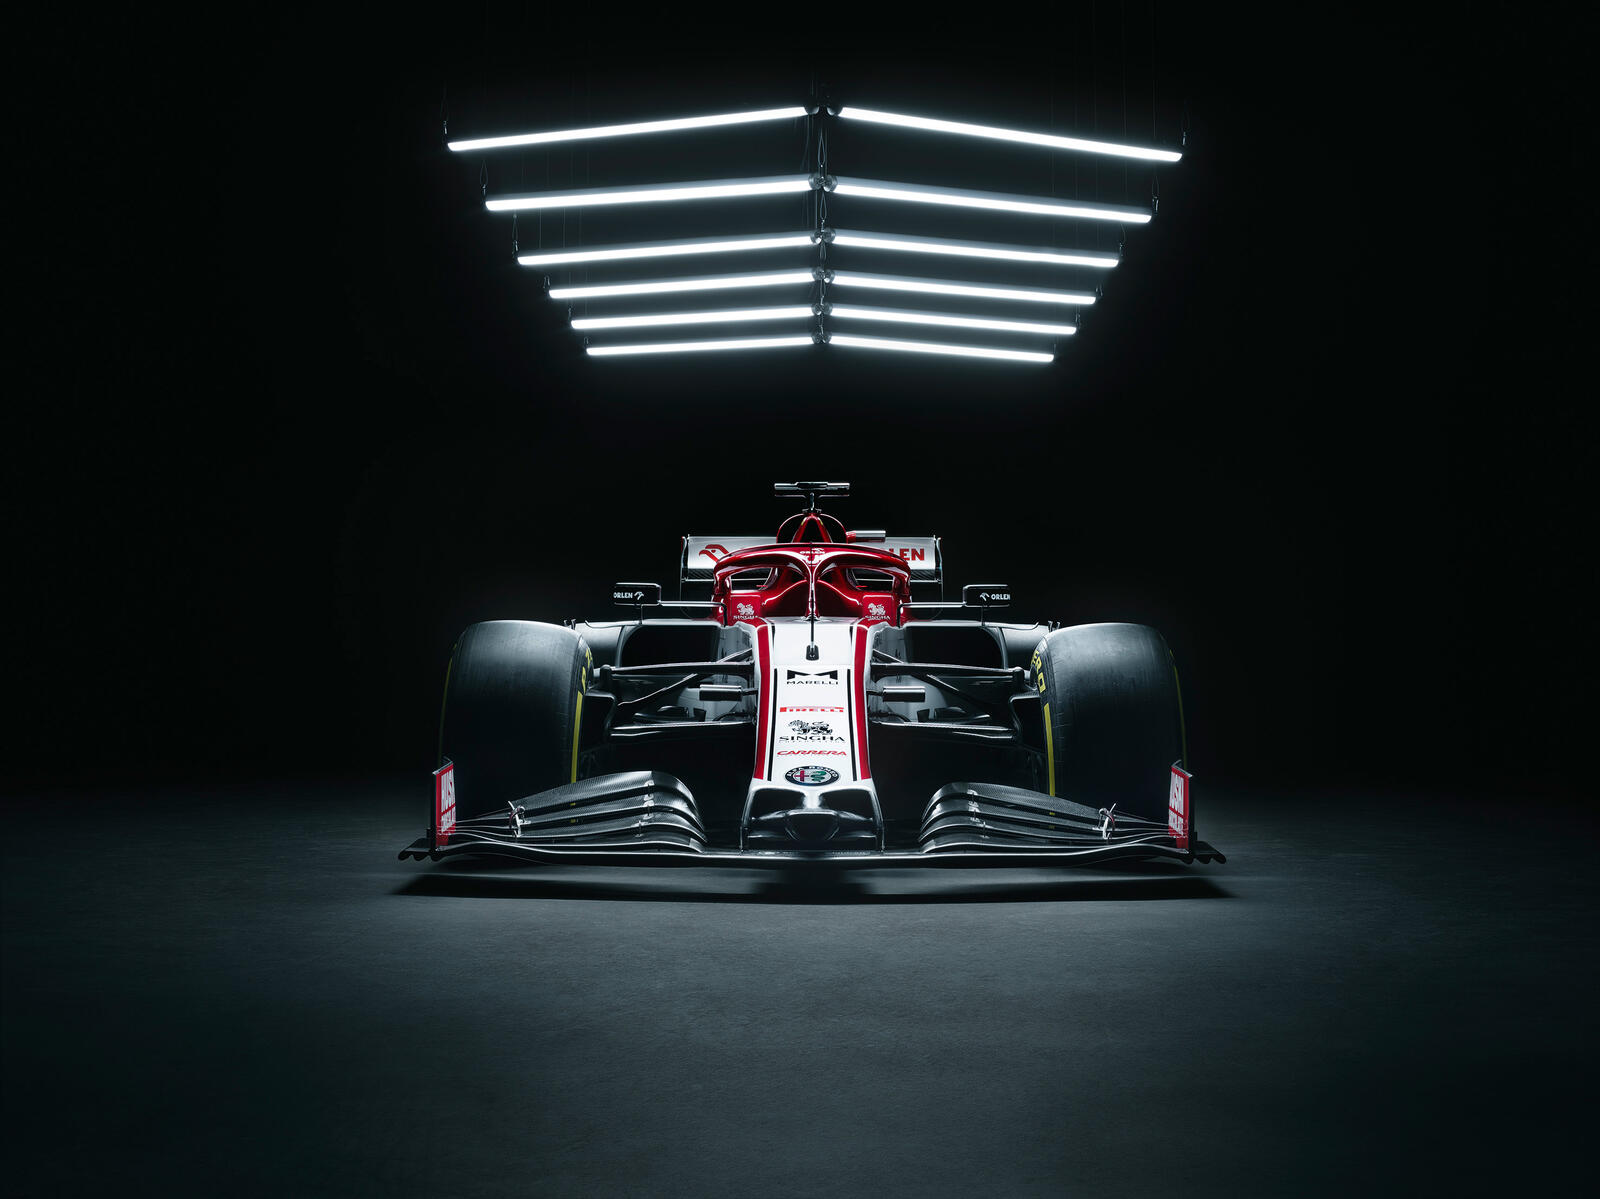 Free photo The Formula 1 is in a dark garage under a lamp.